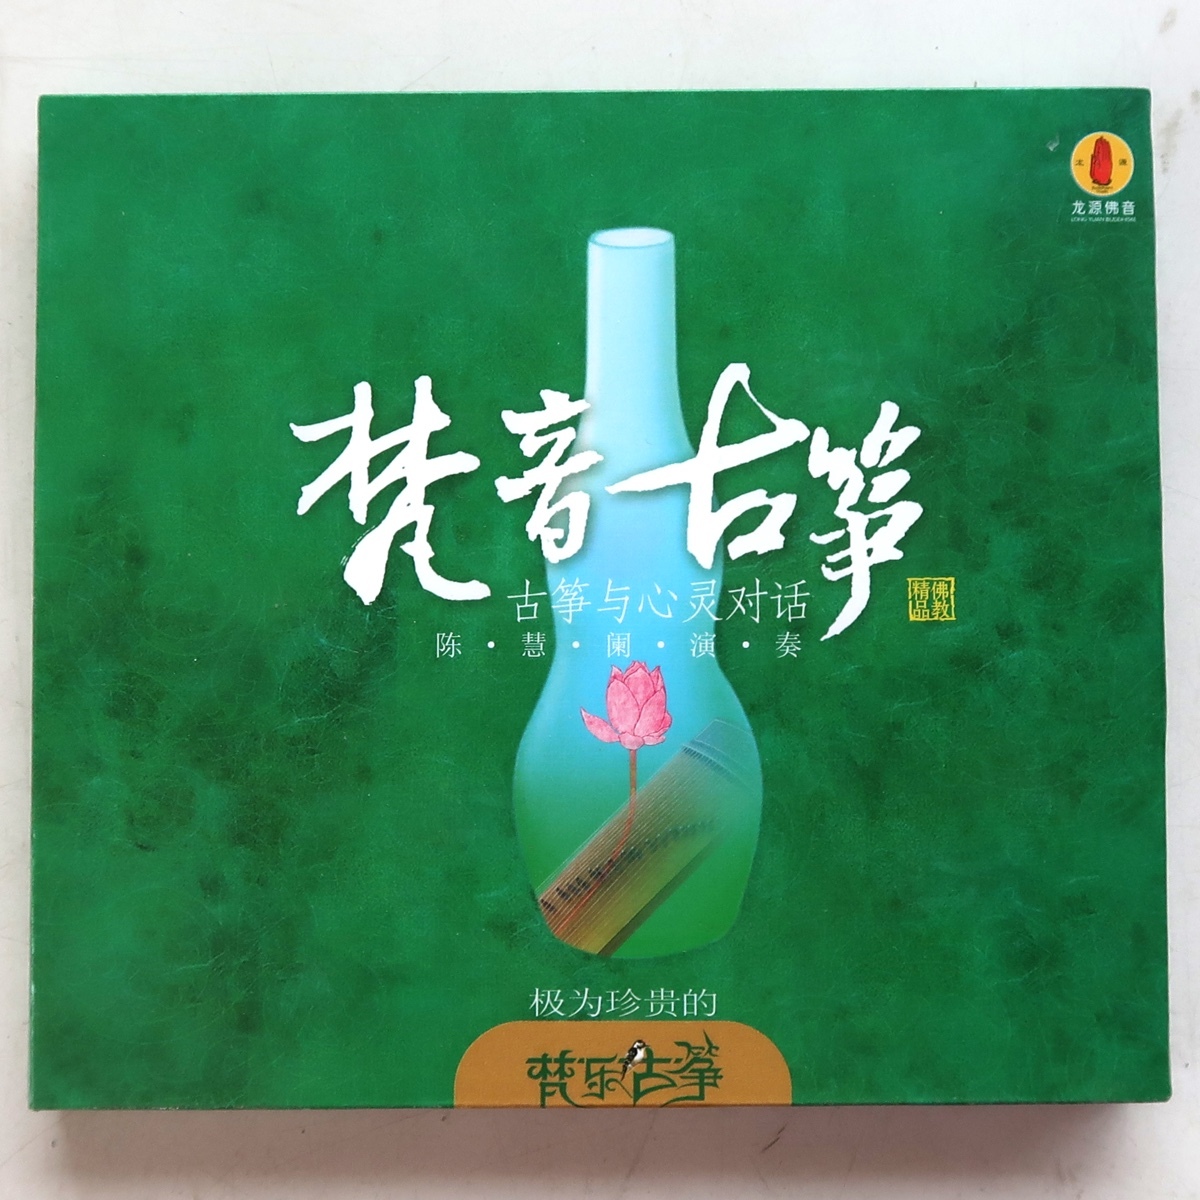 CD 梵音古箏 陳慧蘭 FC113 中国 梵楽筝 仏教音楽